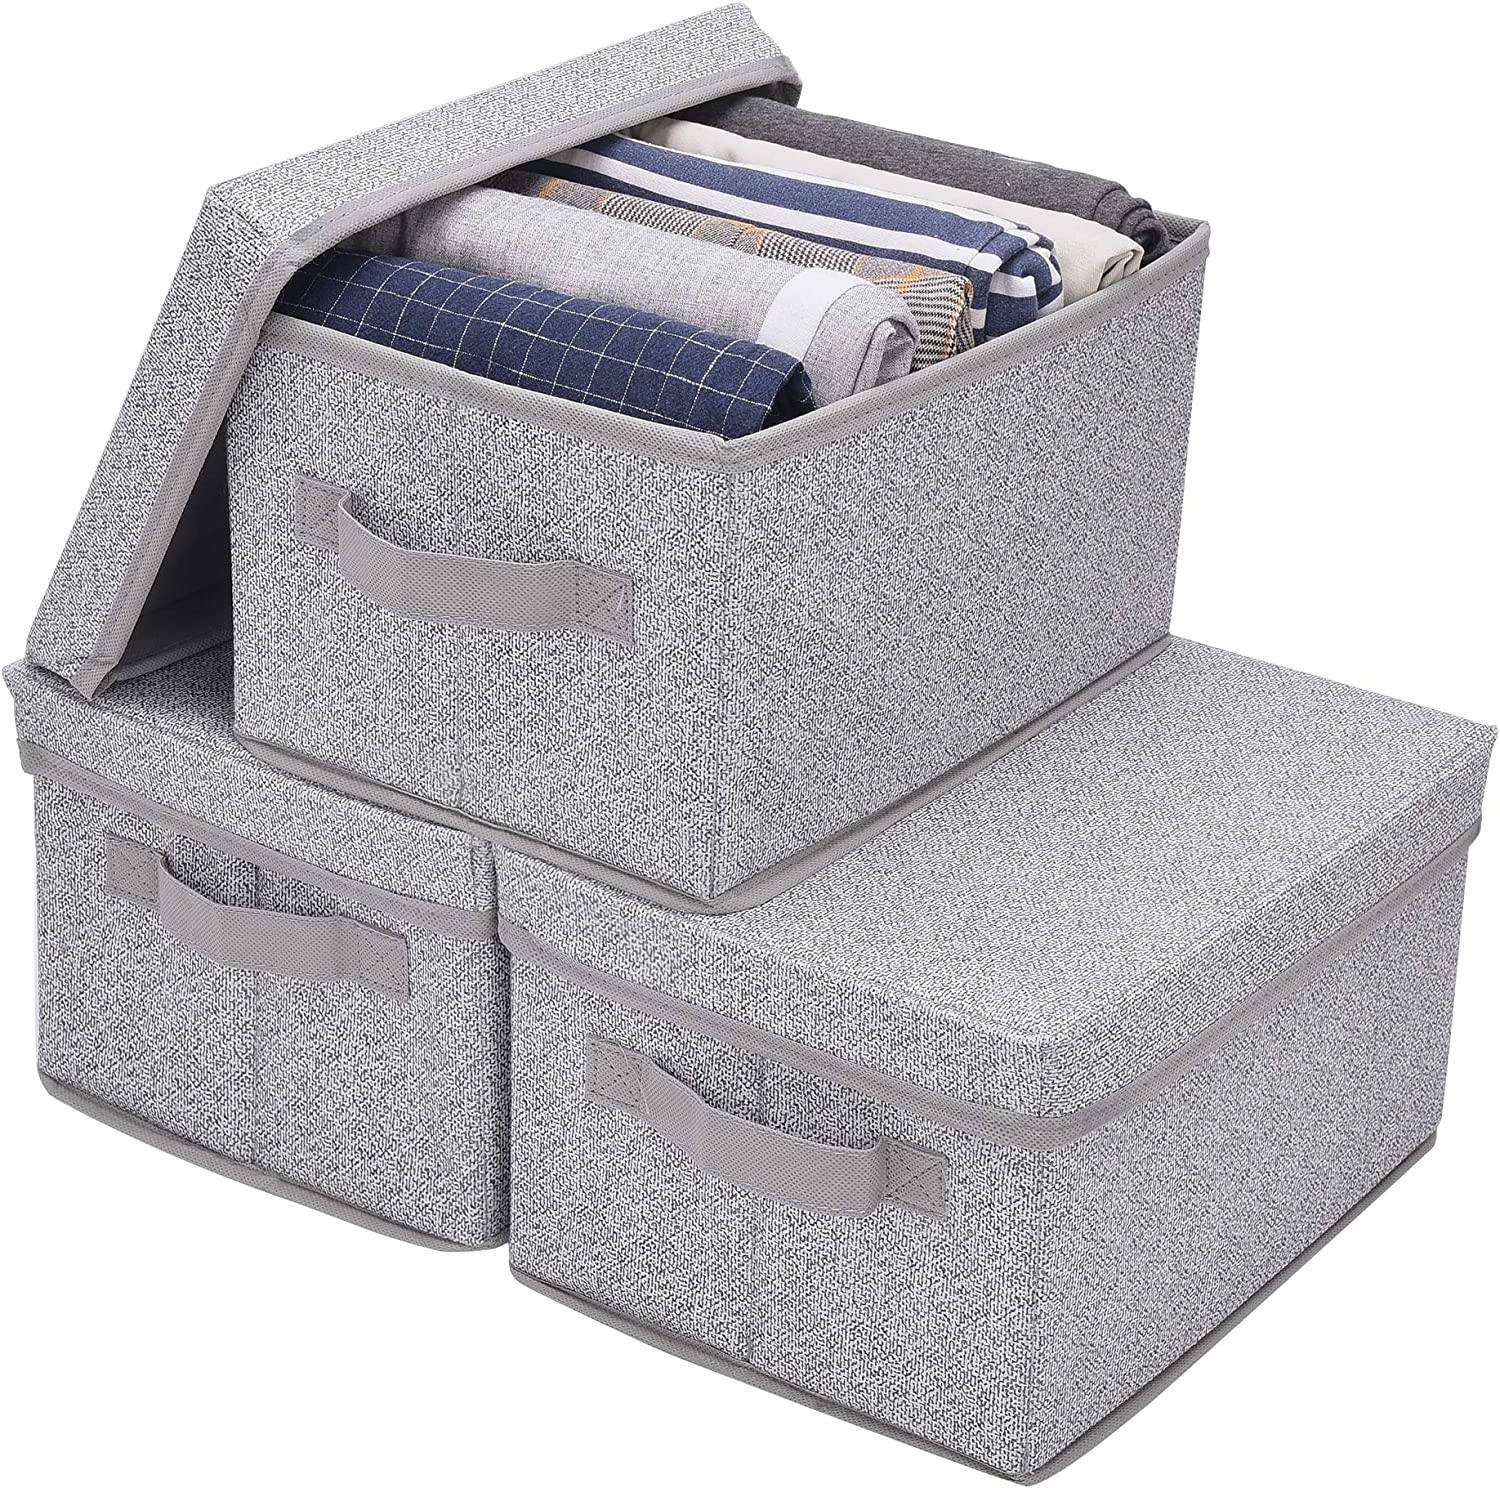 GRANNY SAYS Rectangular Fabric Storage Bins & Boxes, 3-Pack